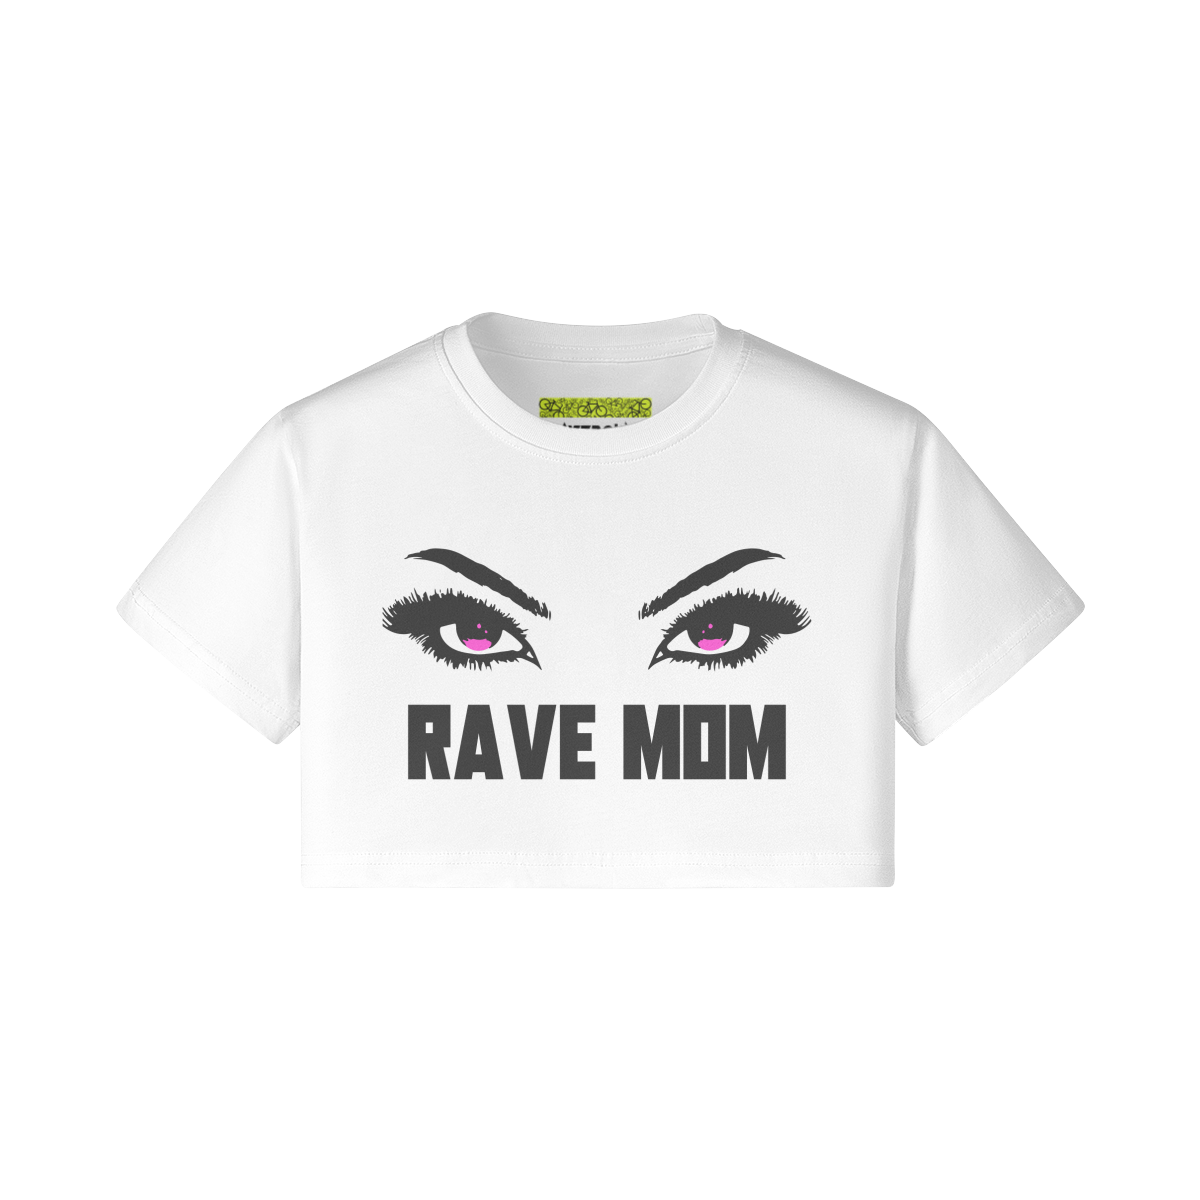 RAVE MOM - Crop Top T-shirt